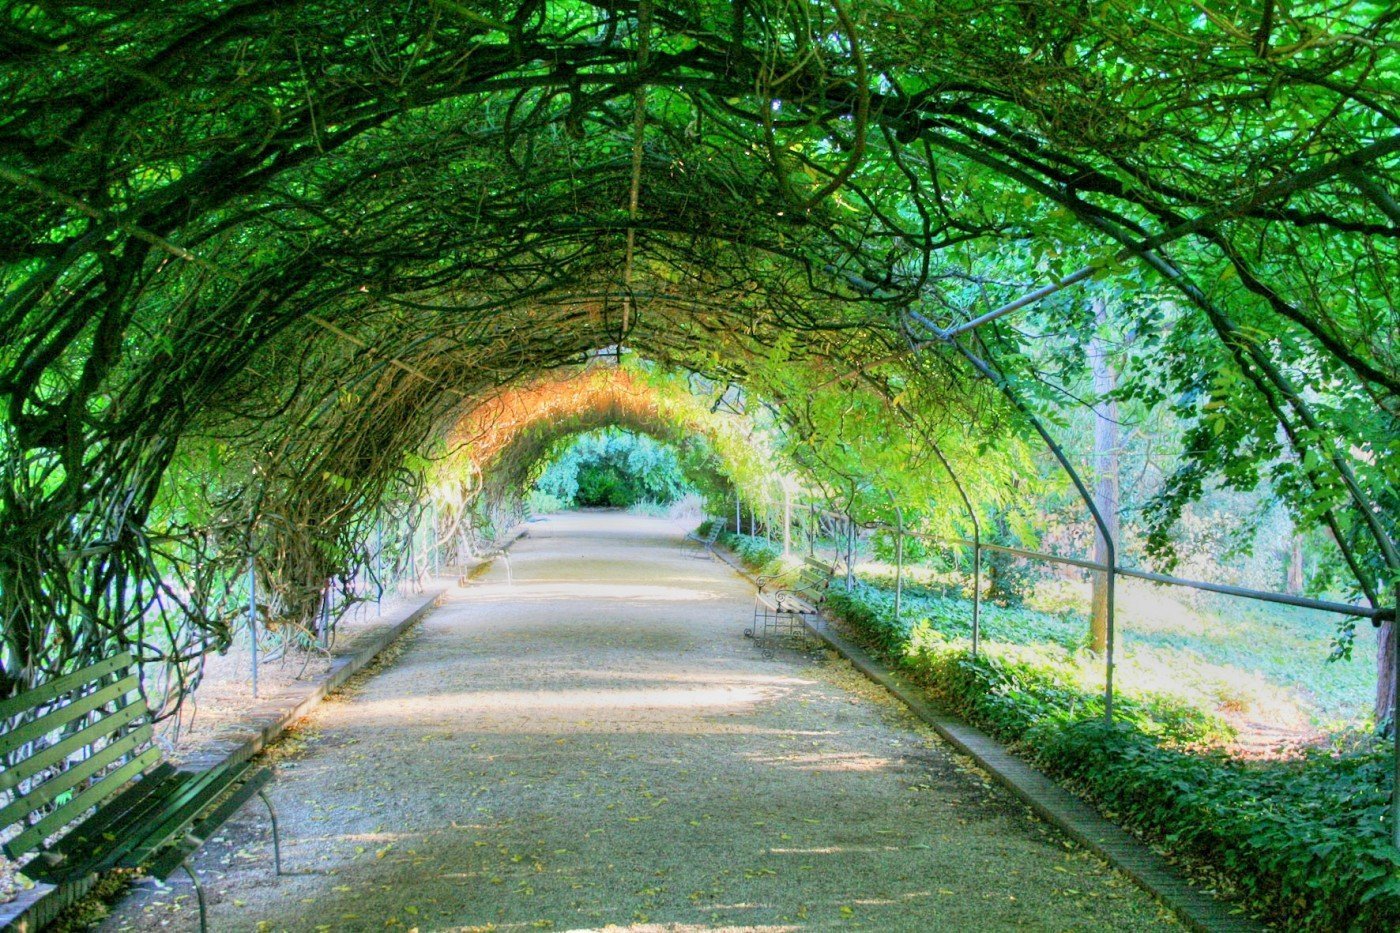 Green Tunnel, Adelaide Botanic Gardens. Photo by Georgie Sharp via Flickr CC 